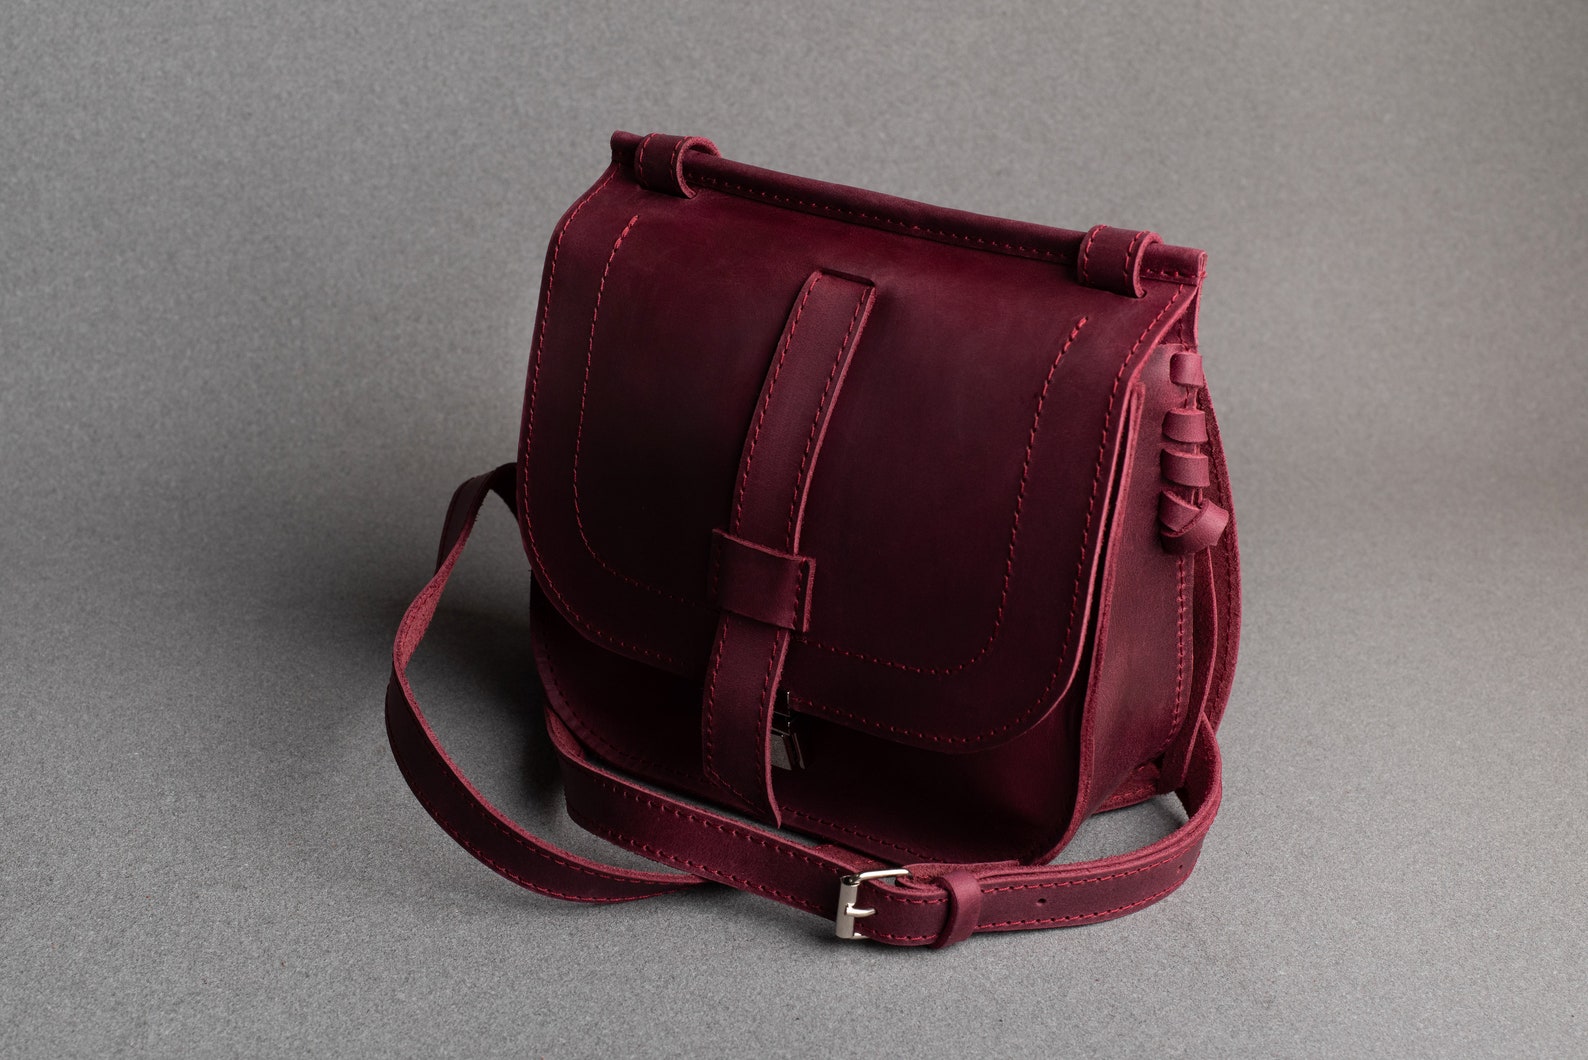 Sangria crossbody small leather messenger bag women. Satchel | Etsy